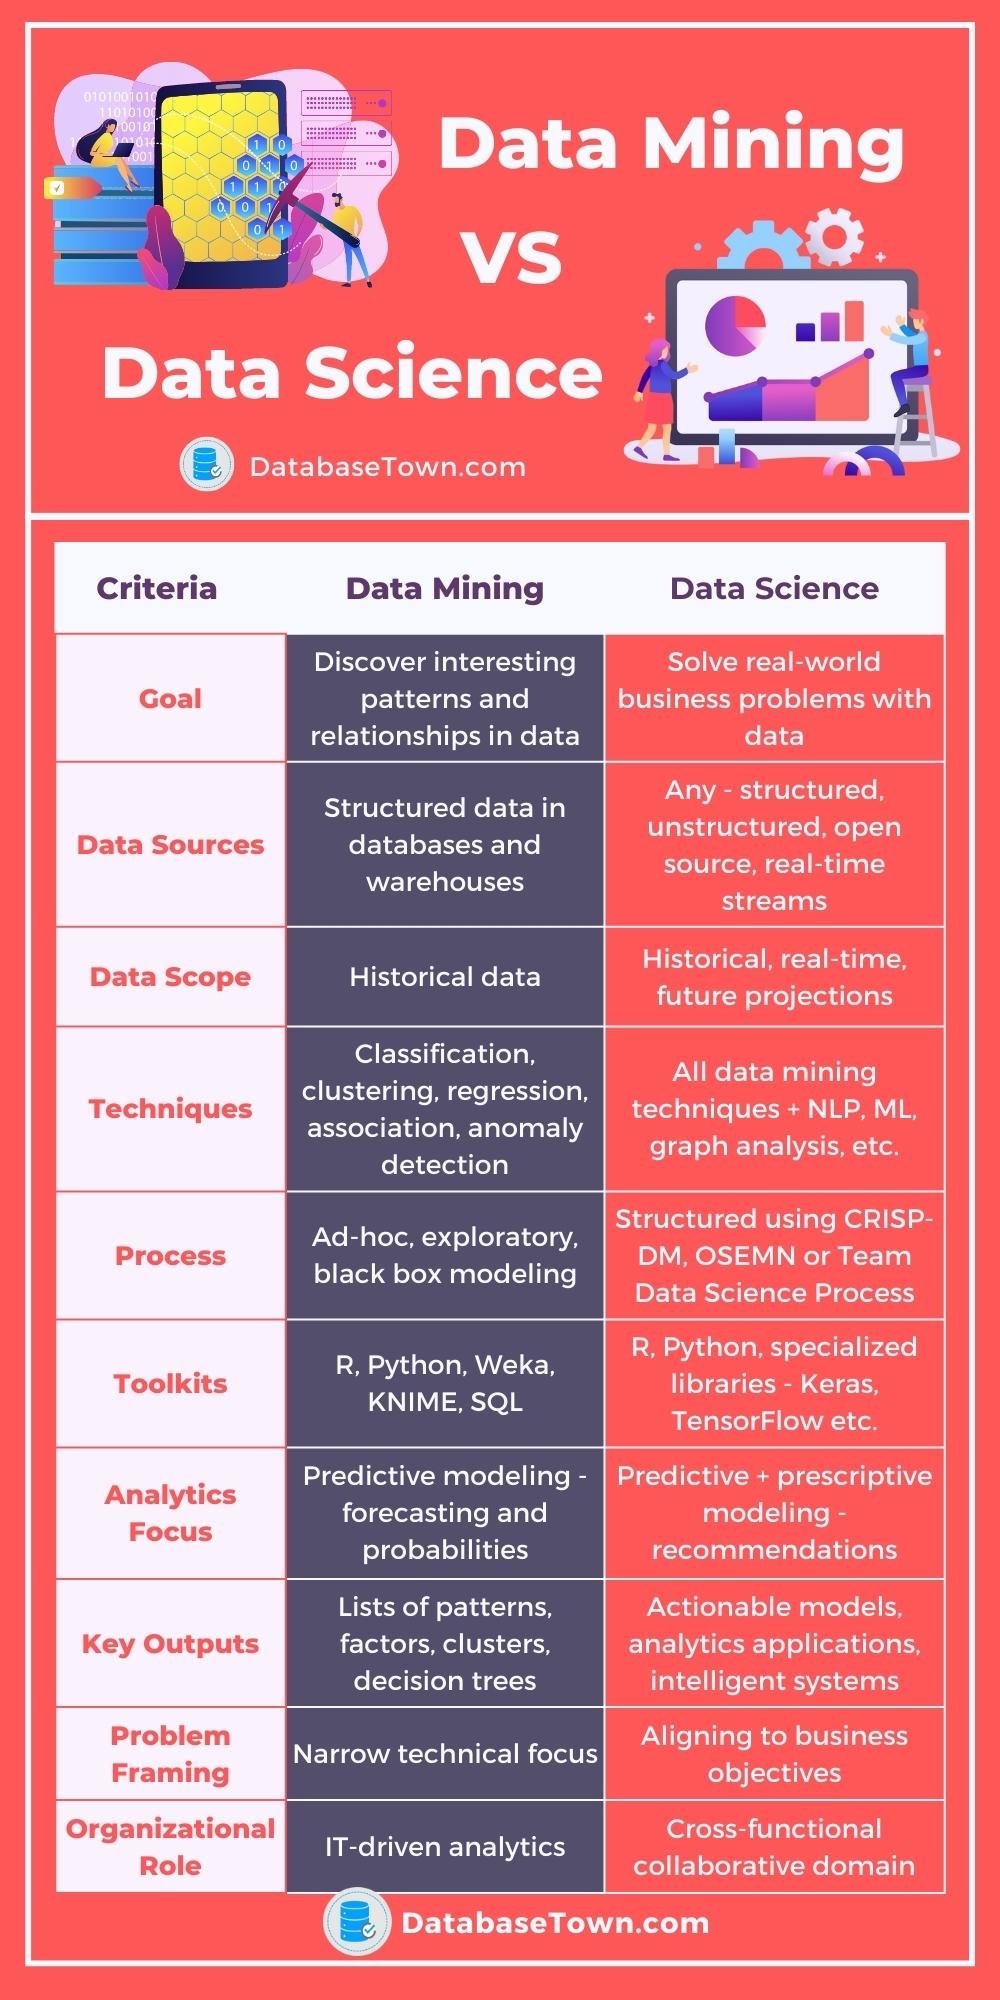 Data Mining VS Data Science key differences